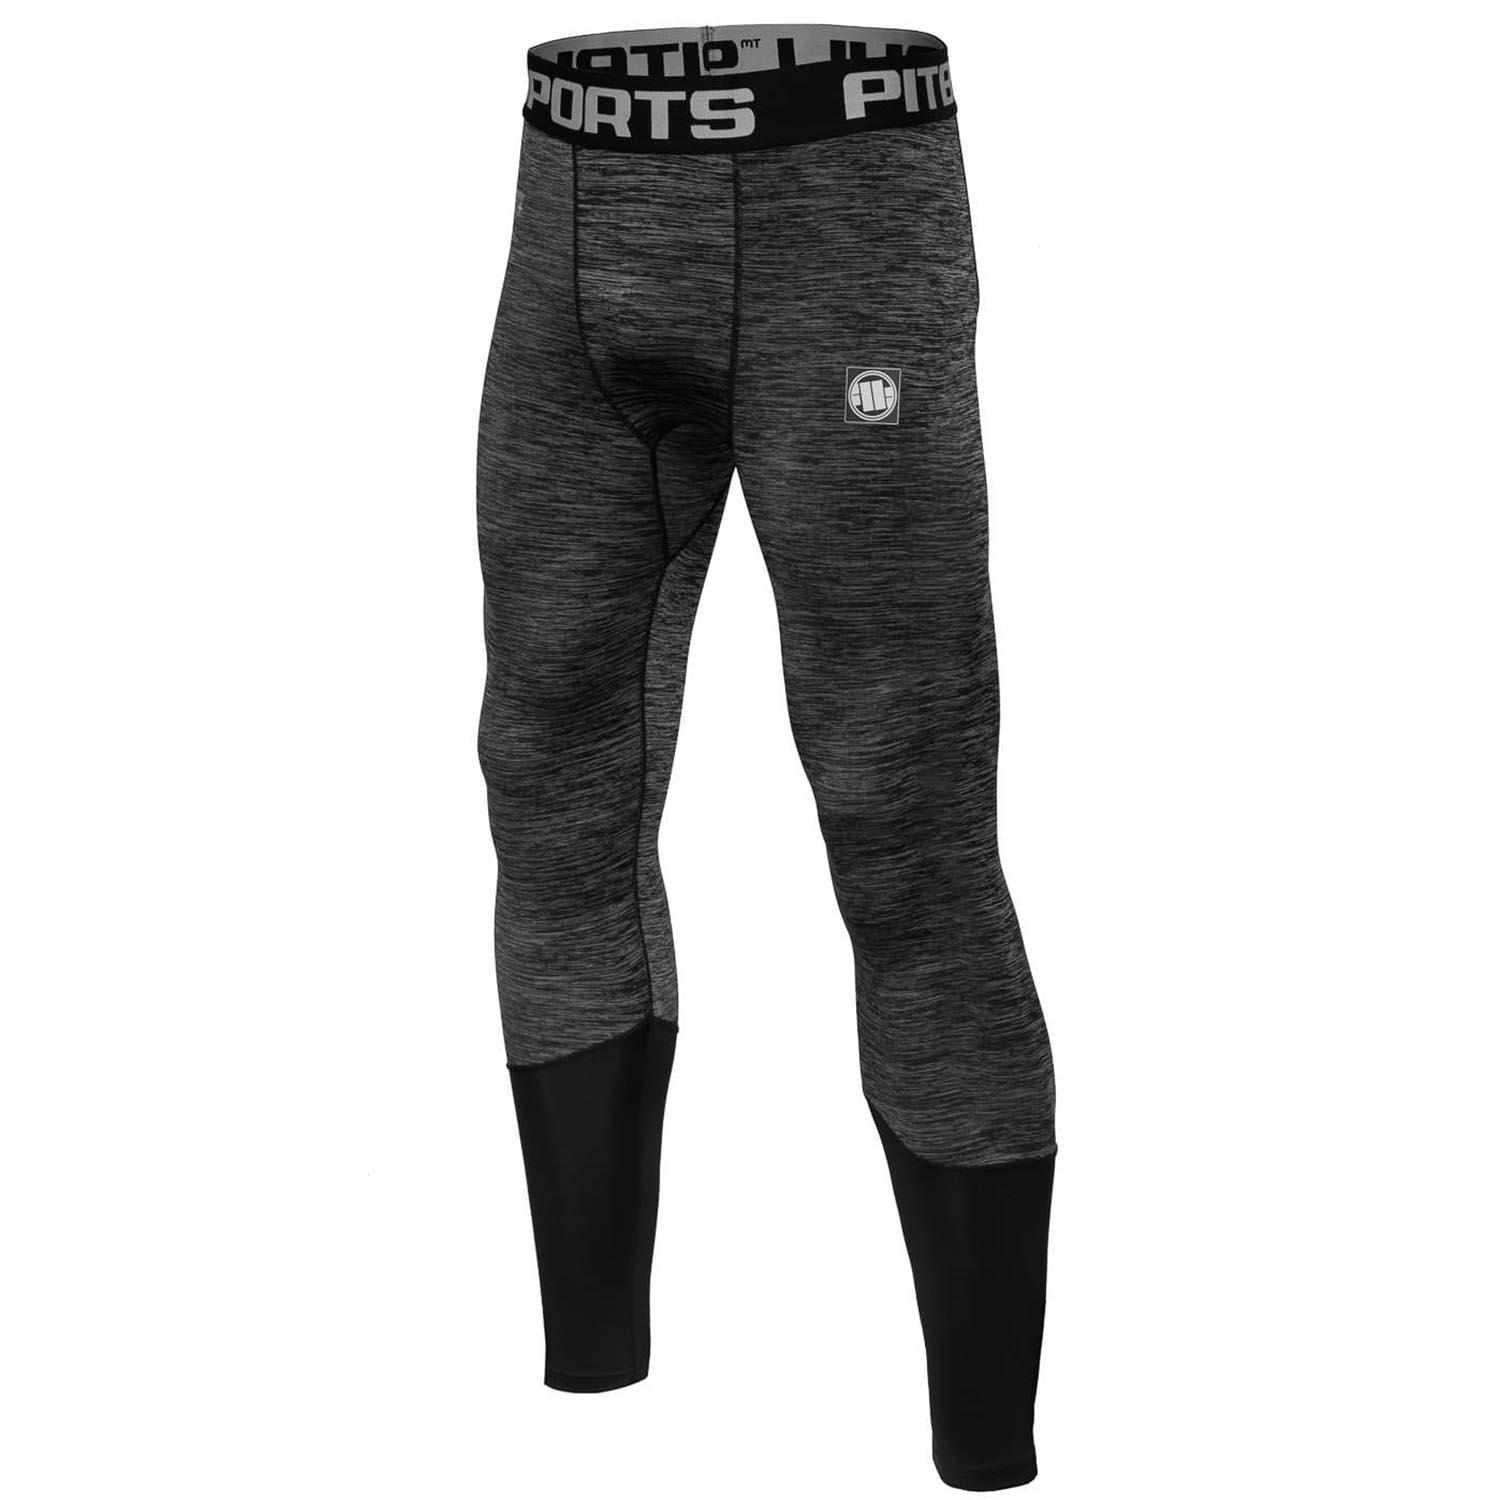 Pit Bull West Coast Compression Pants, Performance, Small Logo, dark grey, XXXL